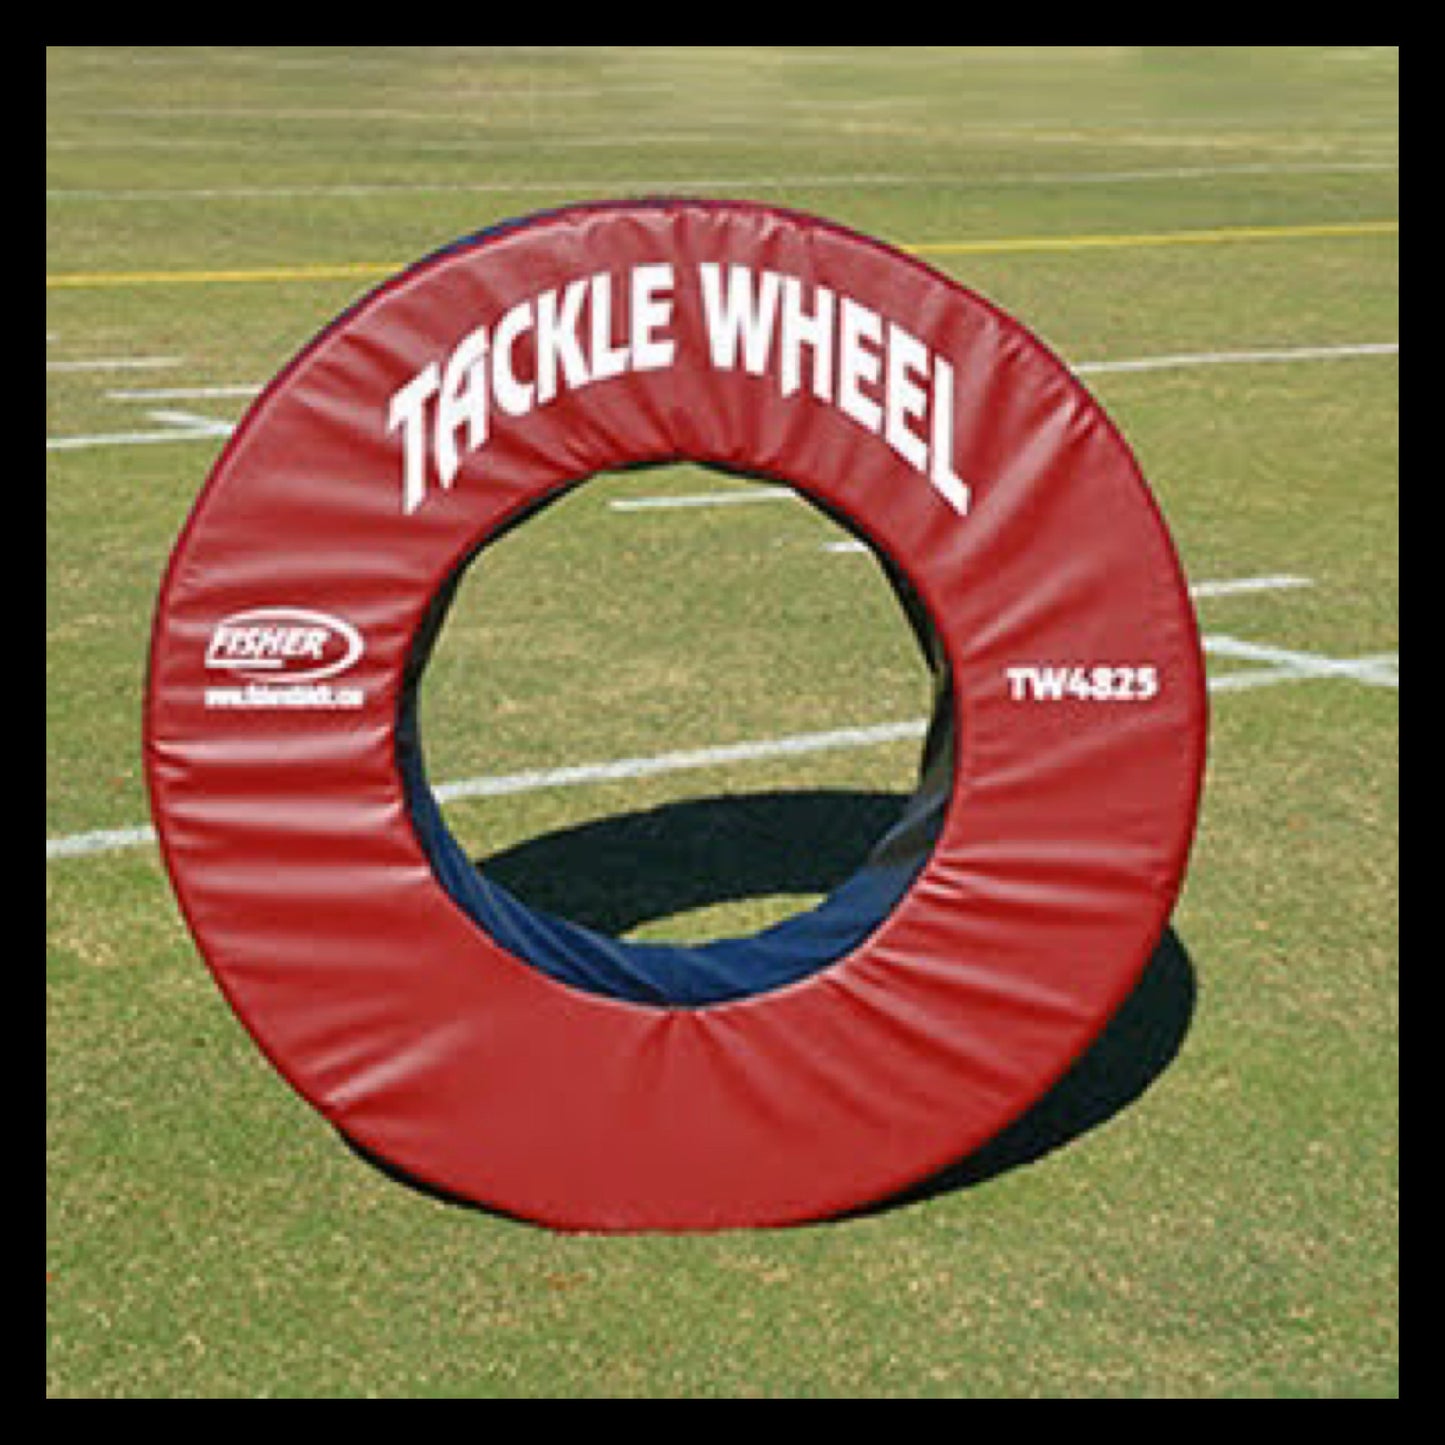 Fisher Tackle Wheel